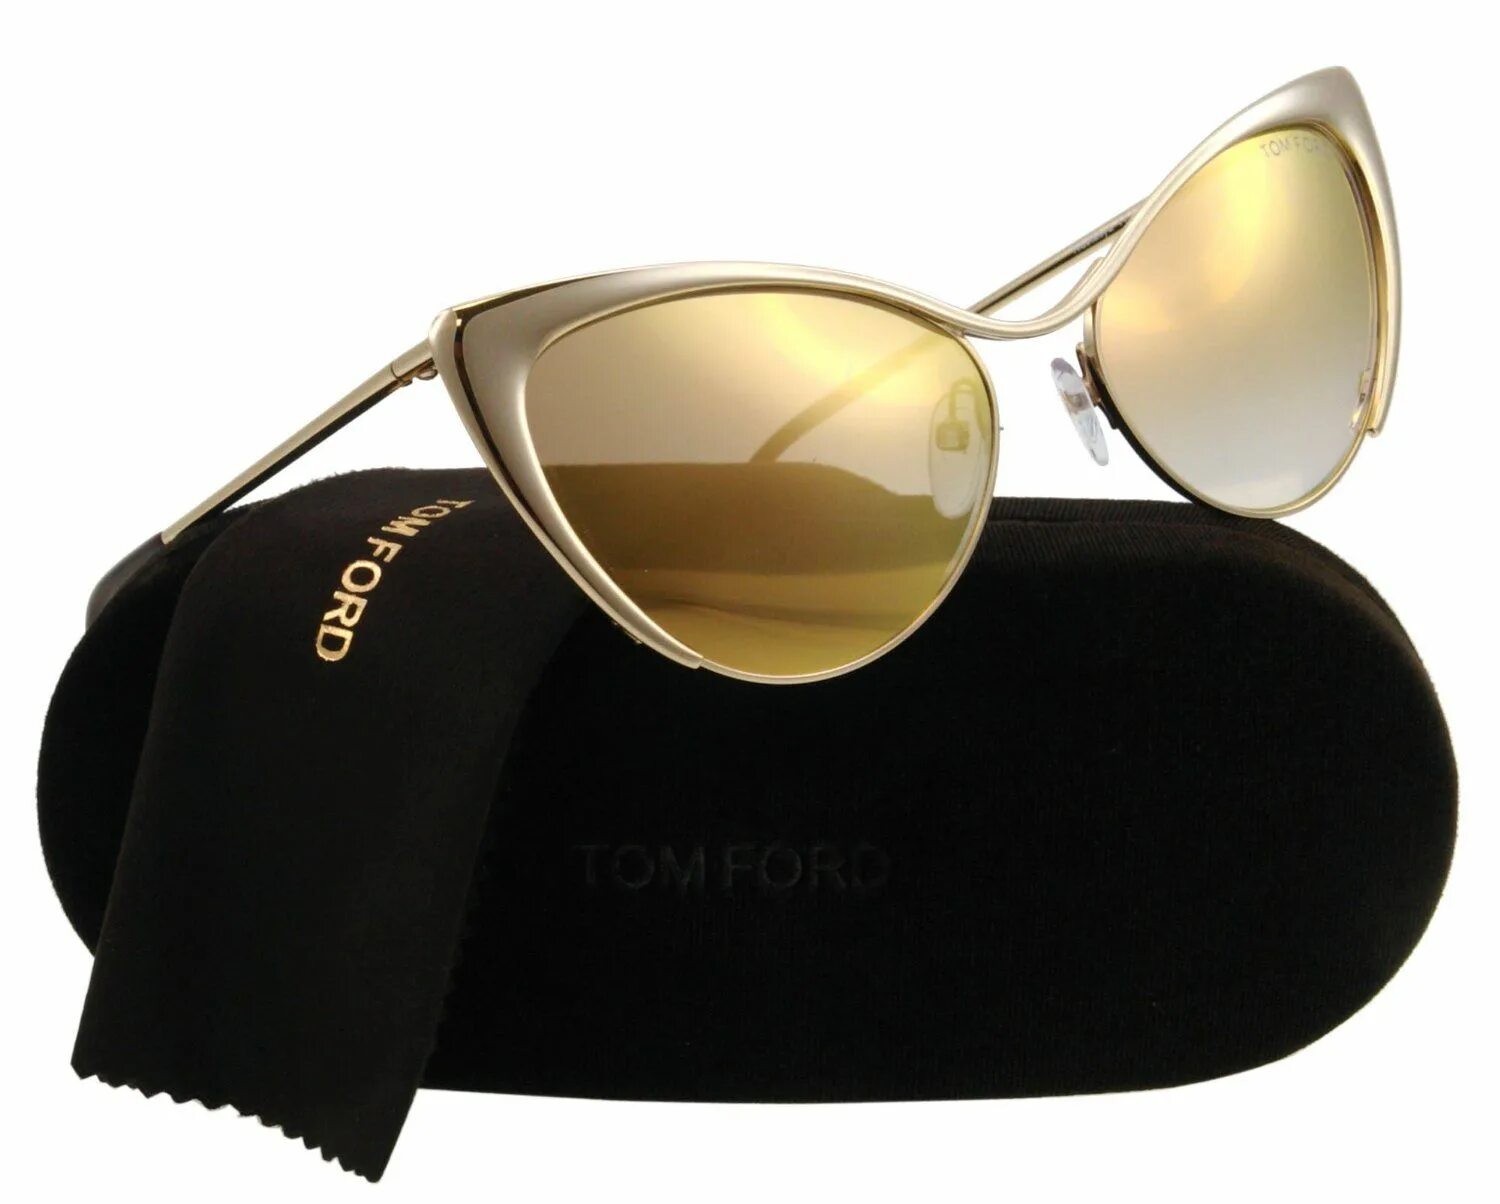 Очки Tom Ford 5348. Tom Ford Gina очки. Tom Ford Sunglasses очки. Tom Ford Sunglasses tf885.